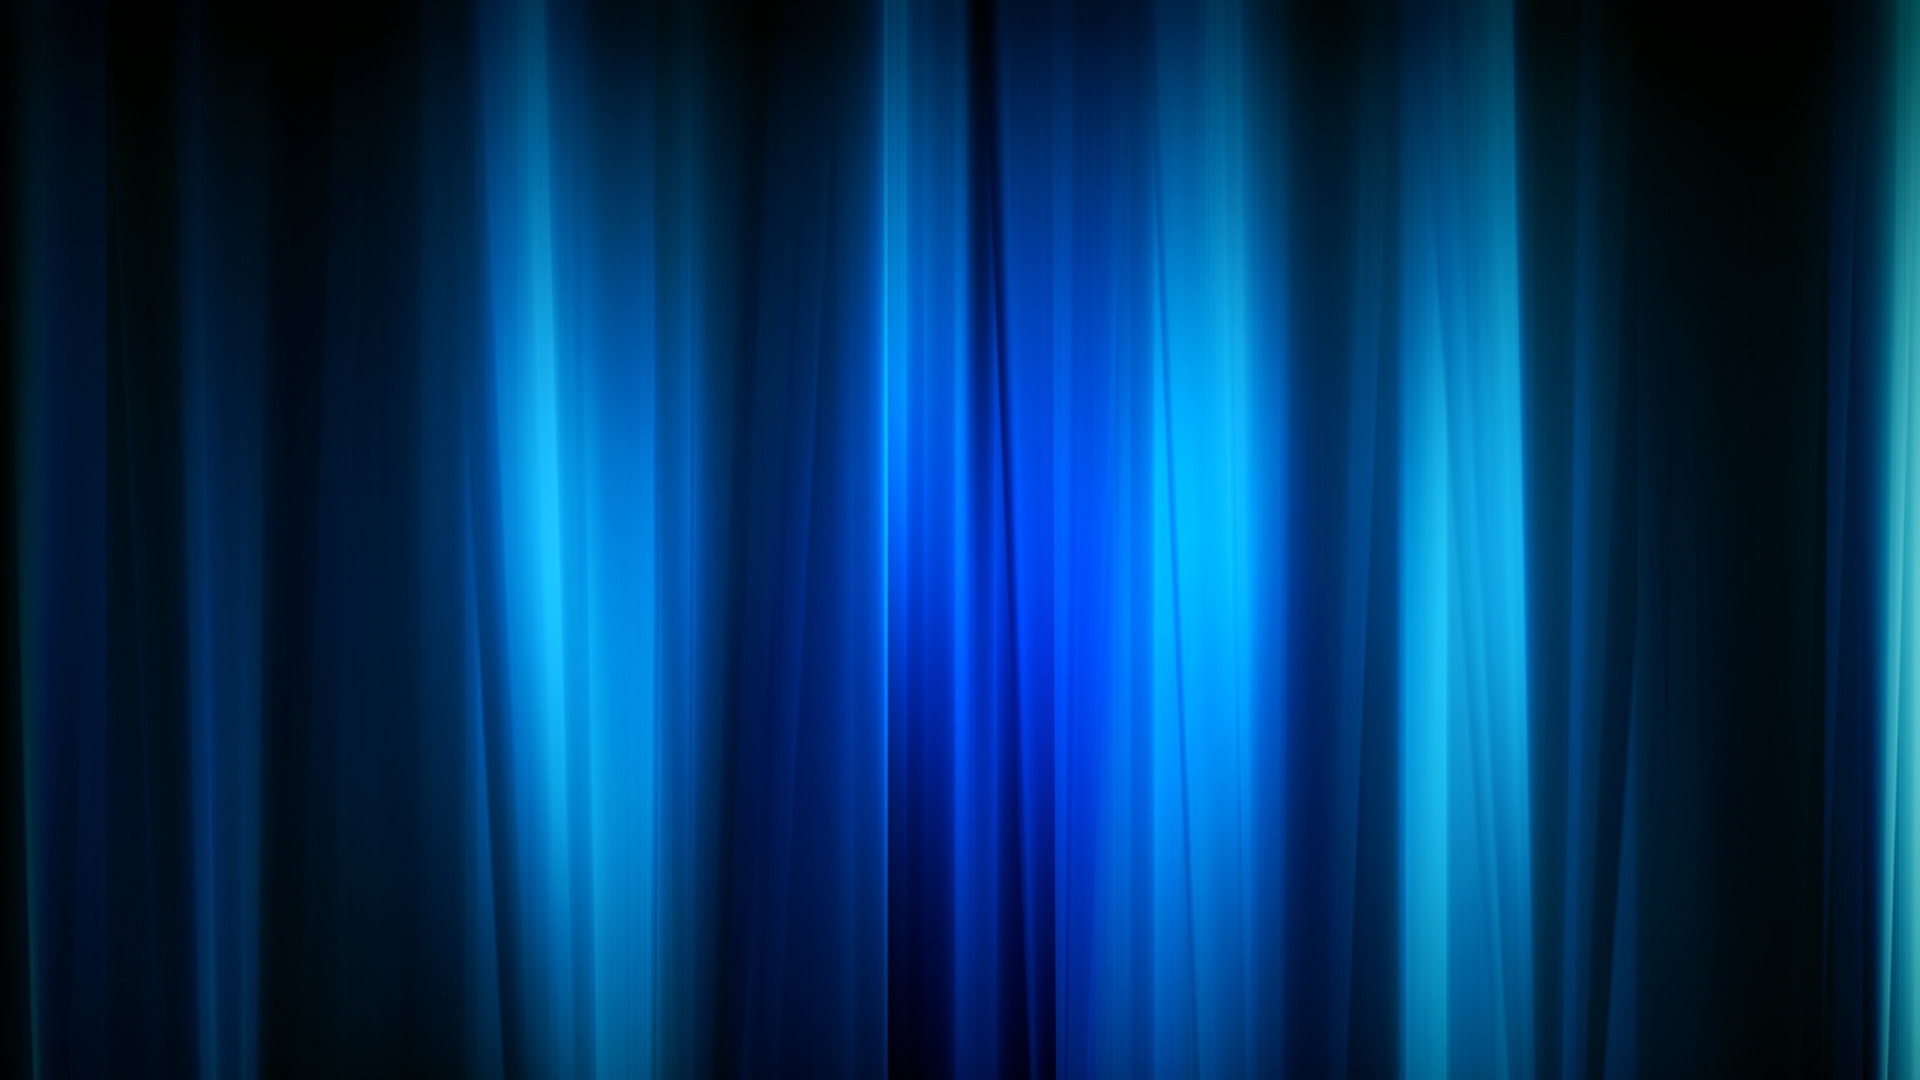 Blue Color HD Wallpaper - Wallpaper, High Definition, High ...